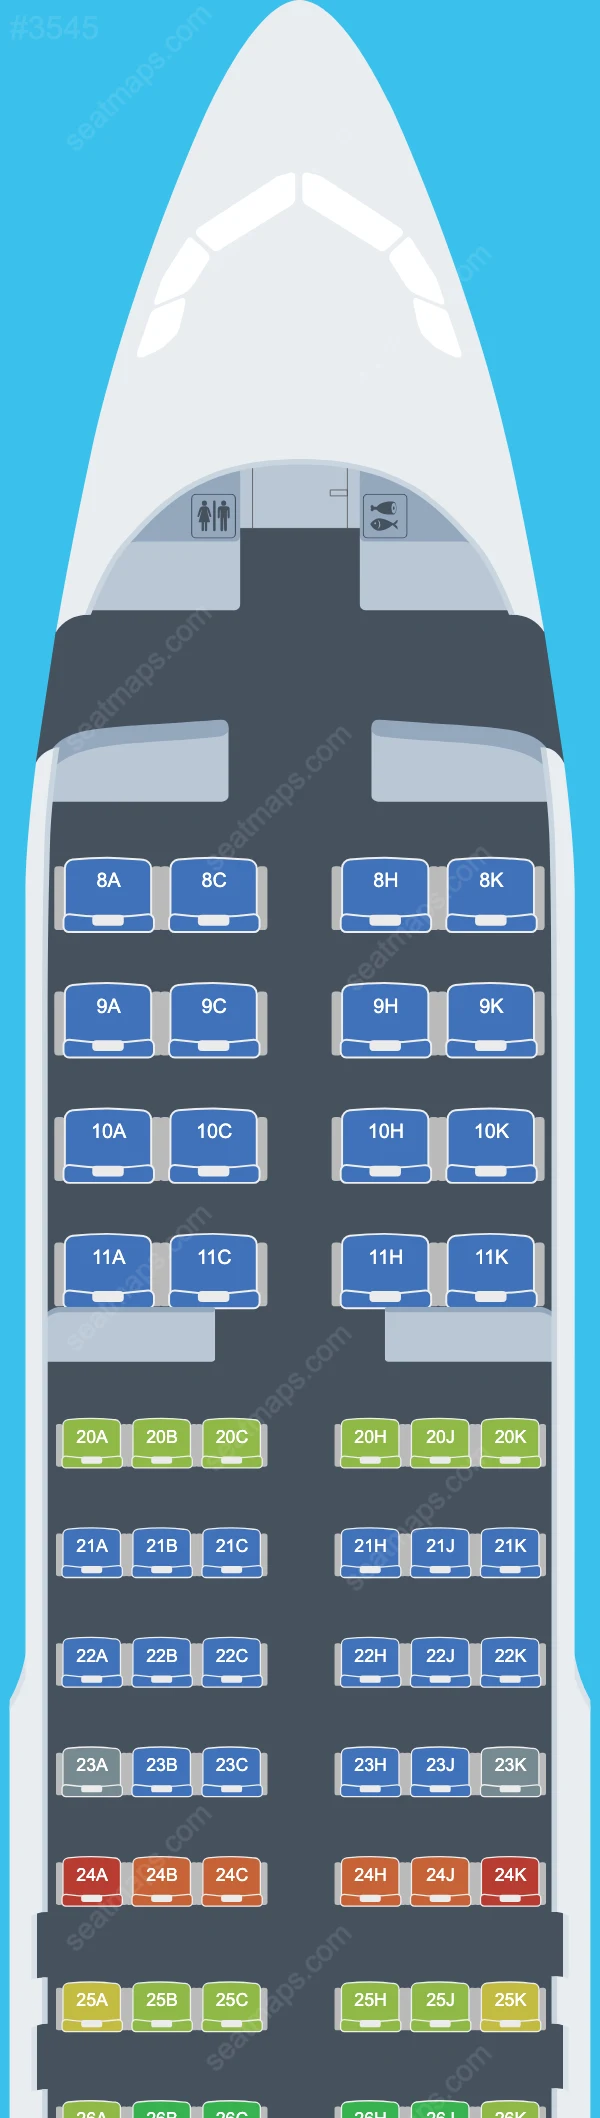 Egyptair Airbus A320 Seat Maps A320-200